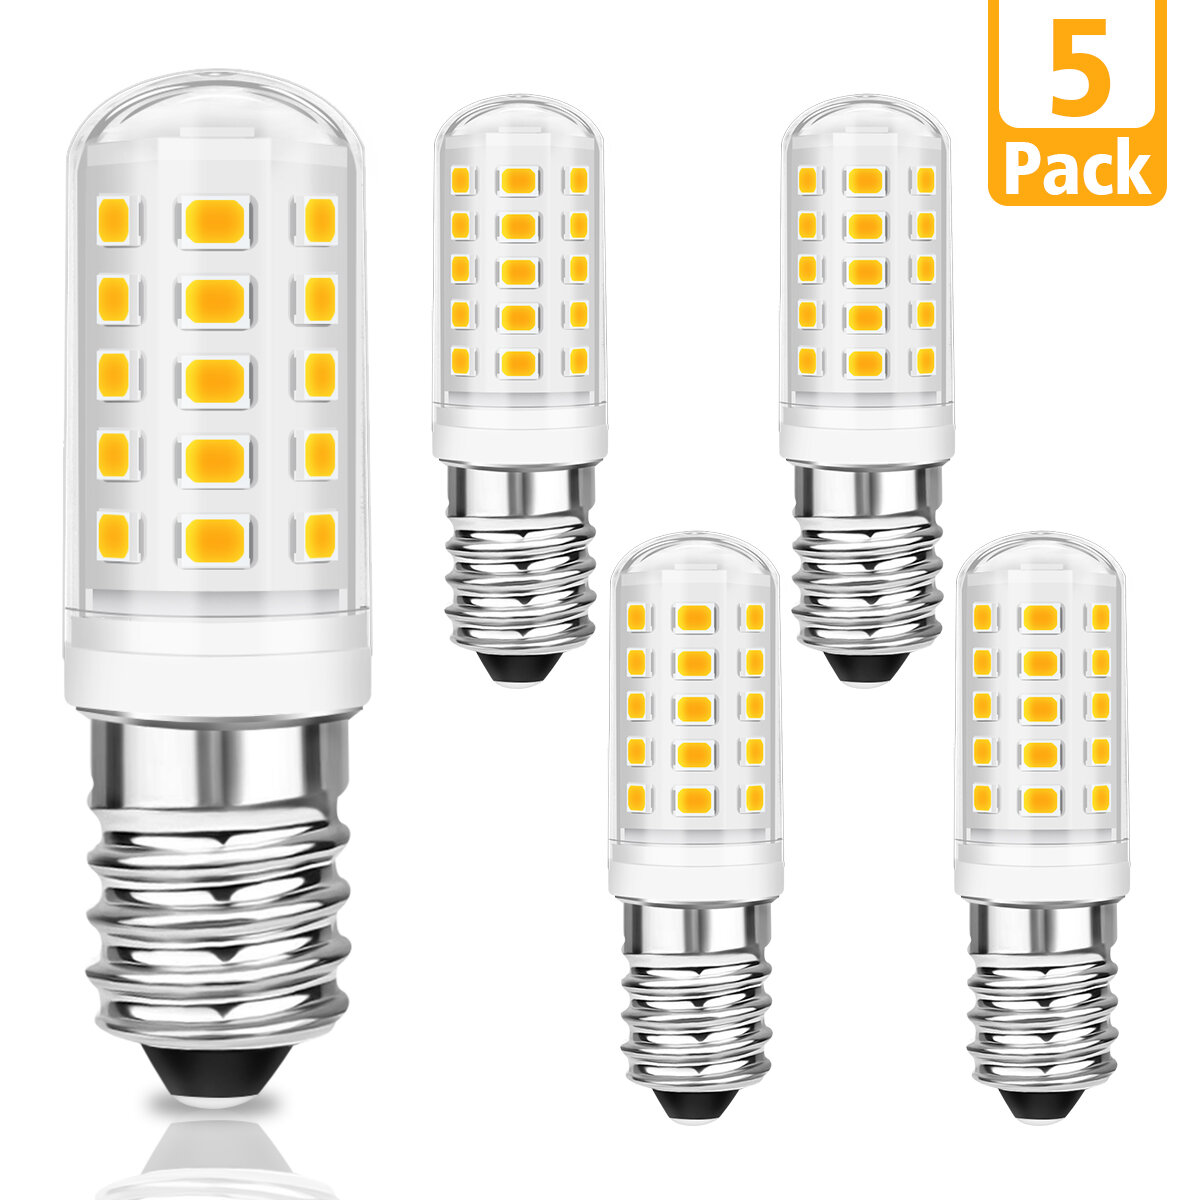 KingSo 5PCS AC 230V 5W 3000K E14 LED Corn Bulb Capsule licht 360 ° Verlichting Lamp